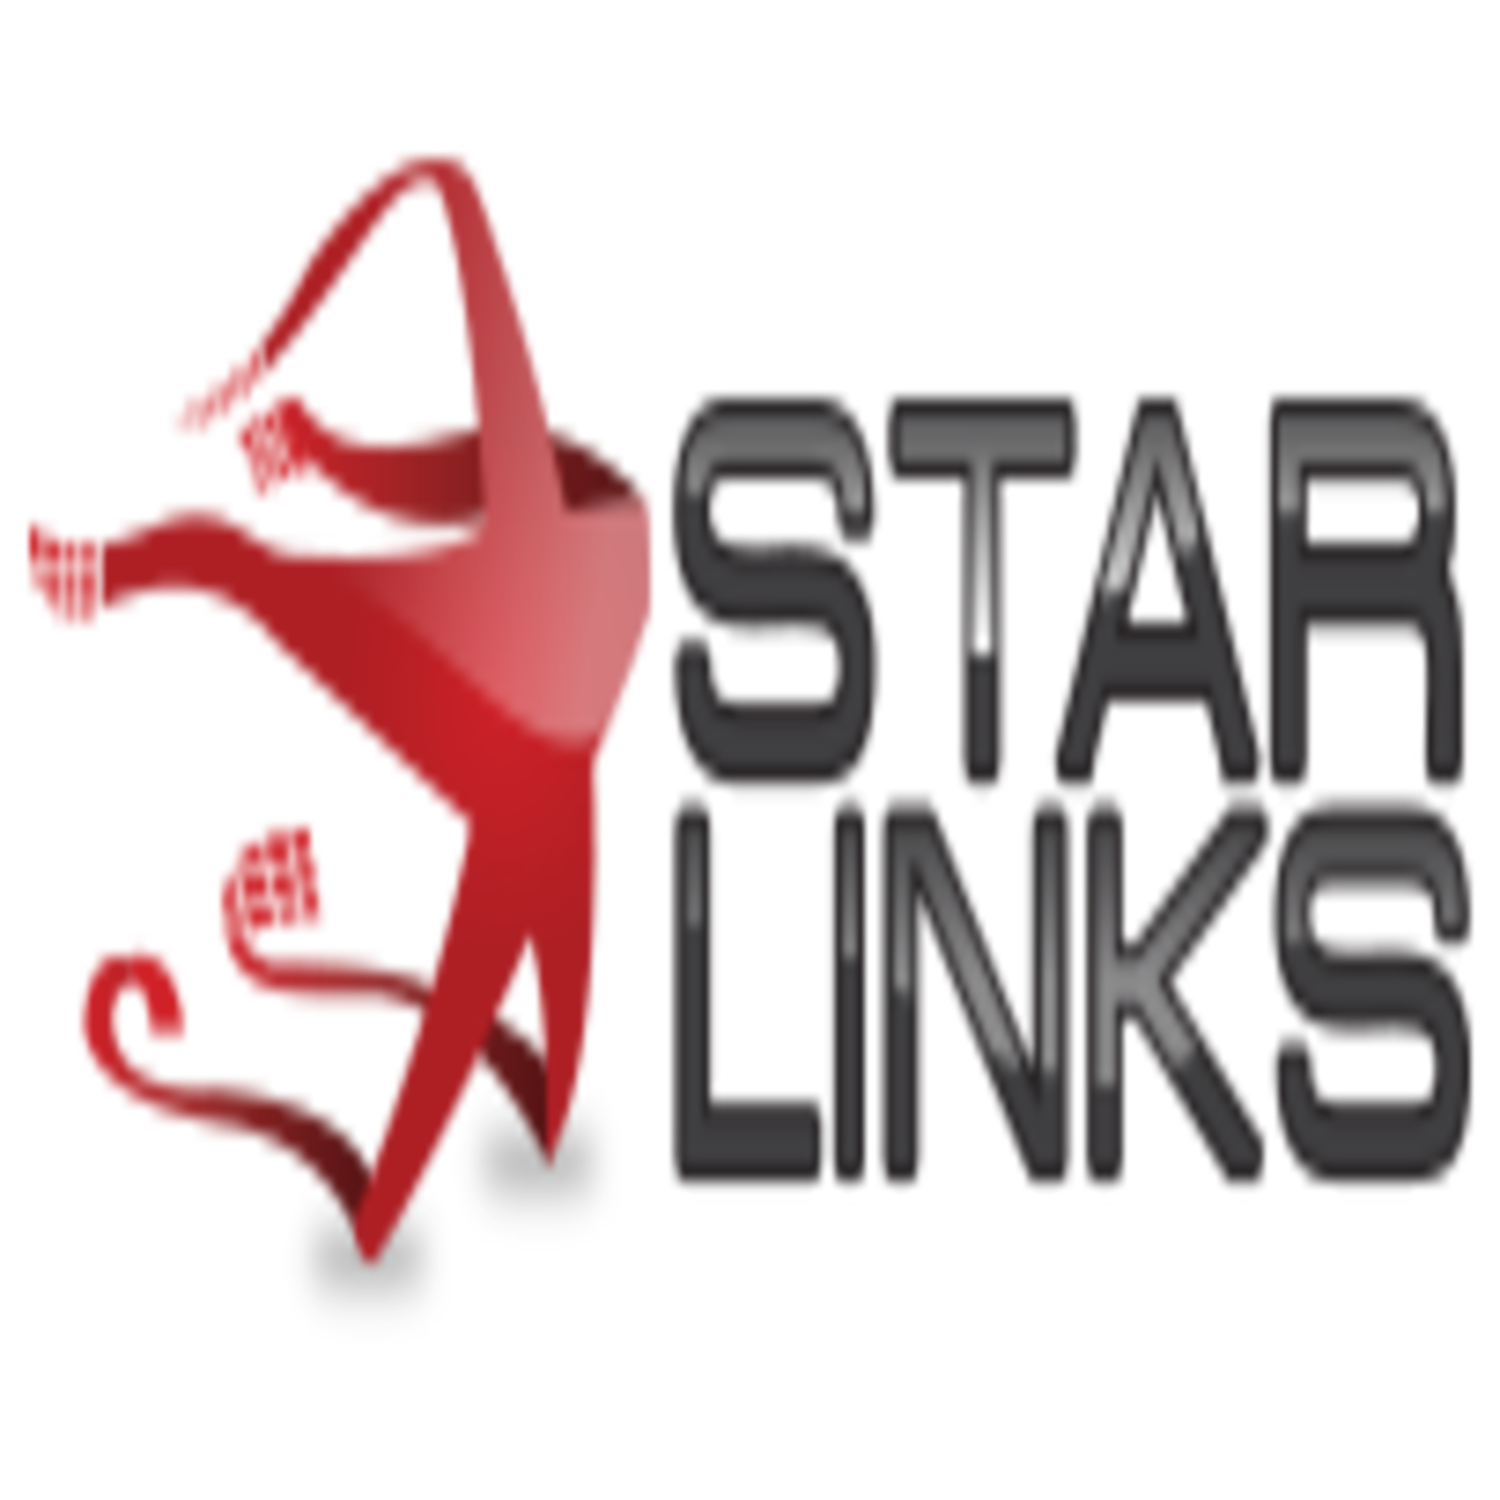 Star Links